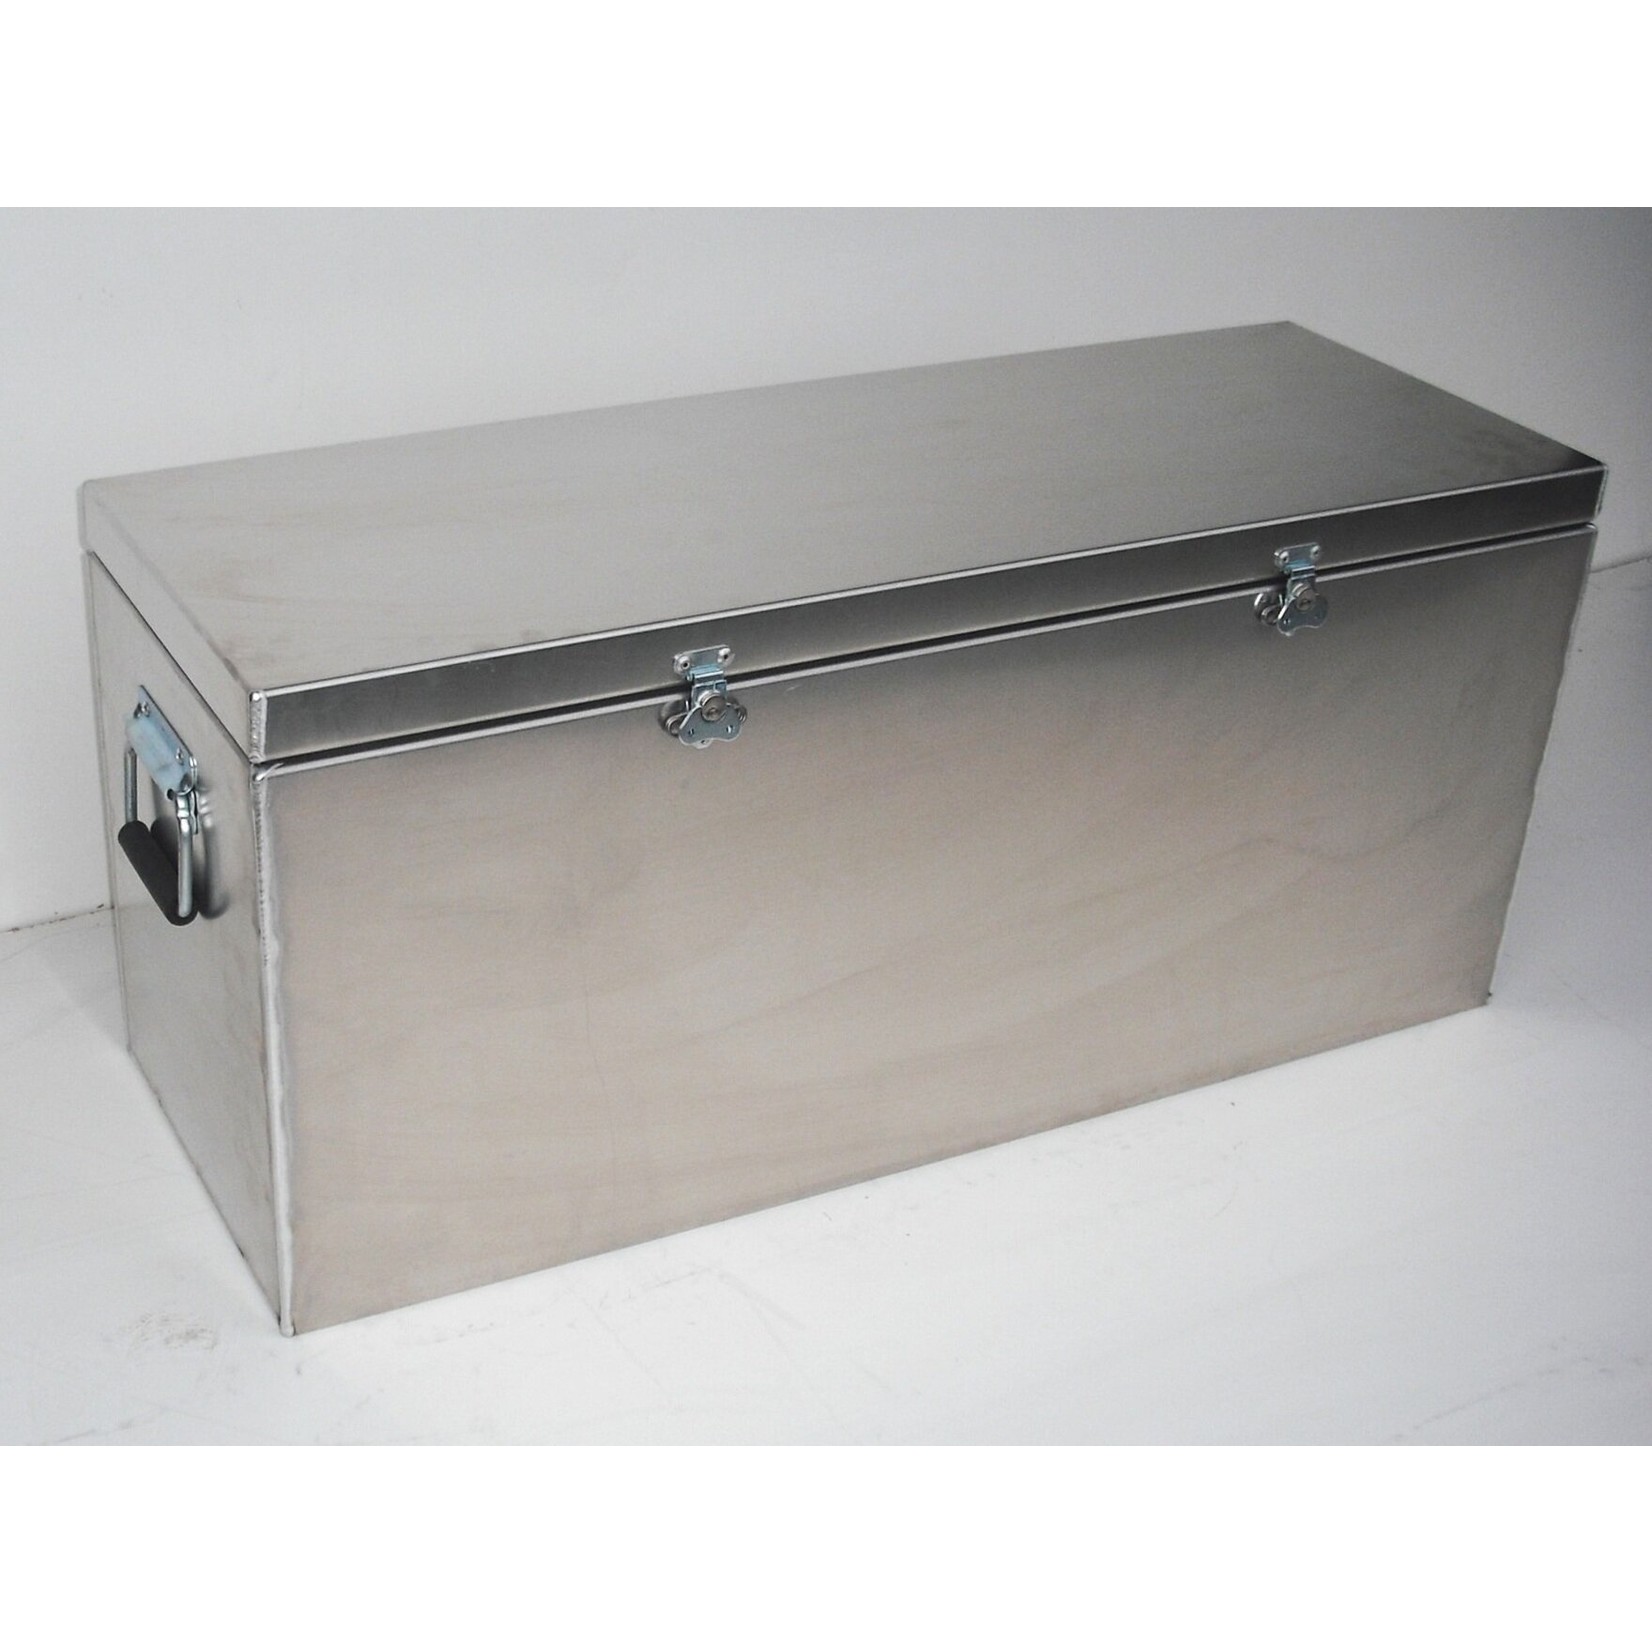 Eddy Out Aluminum Dry Box, 38L x 16H x 13D